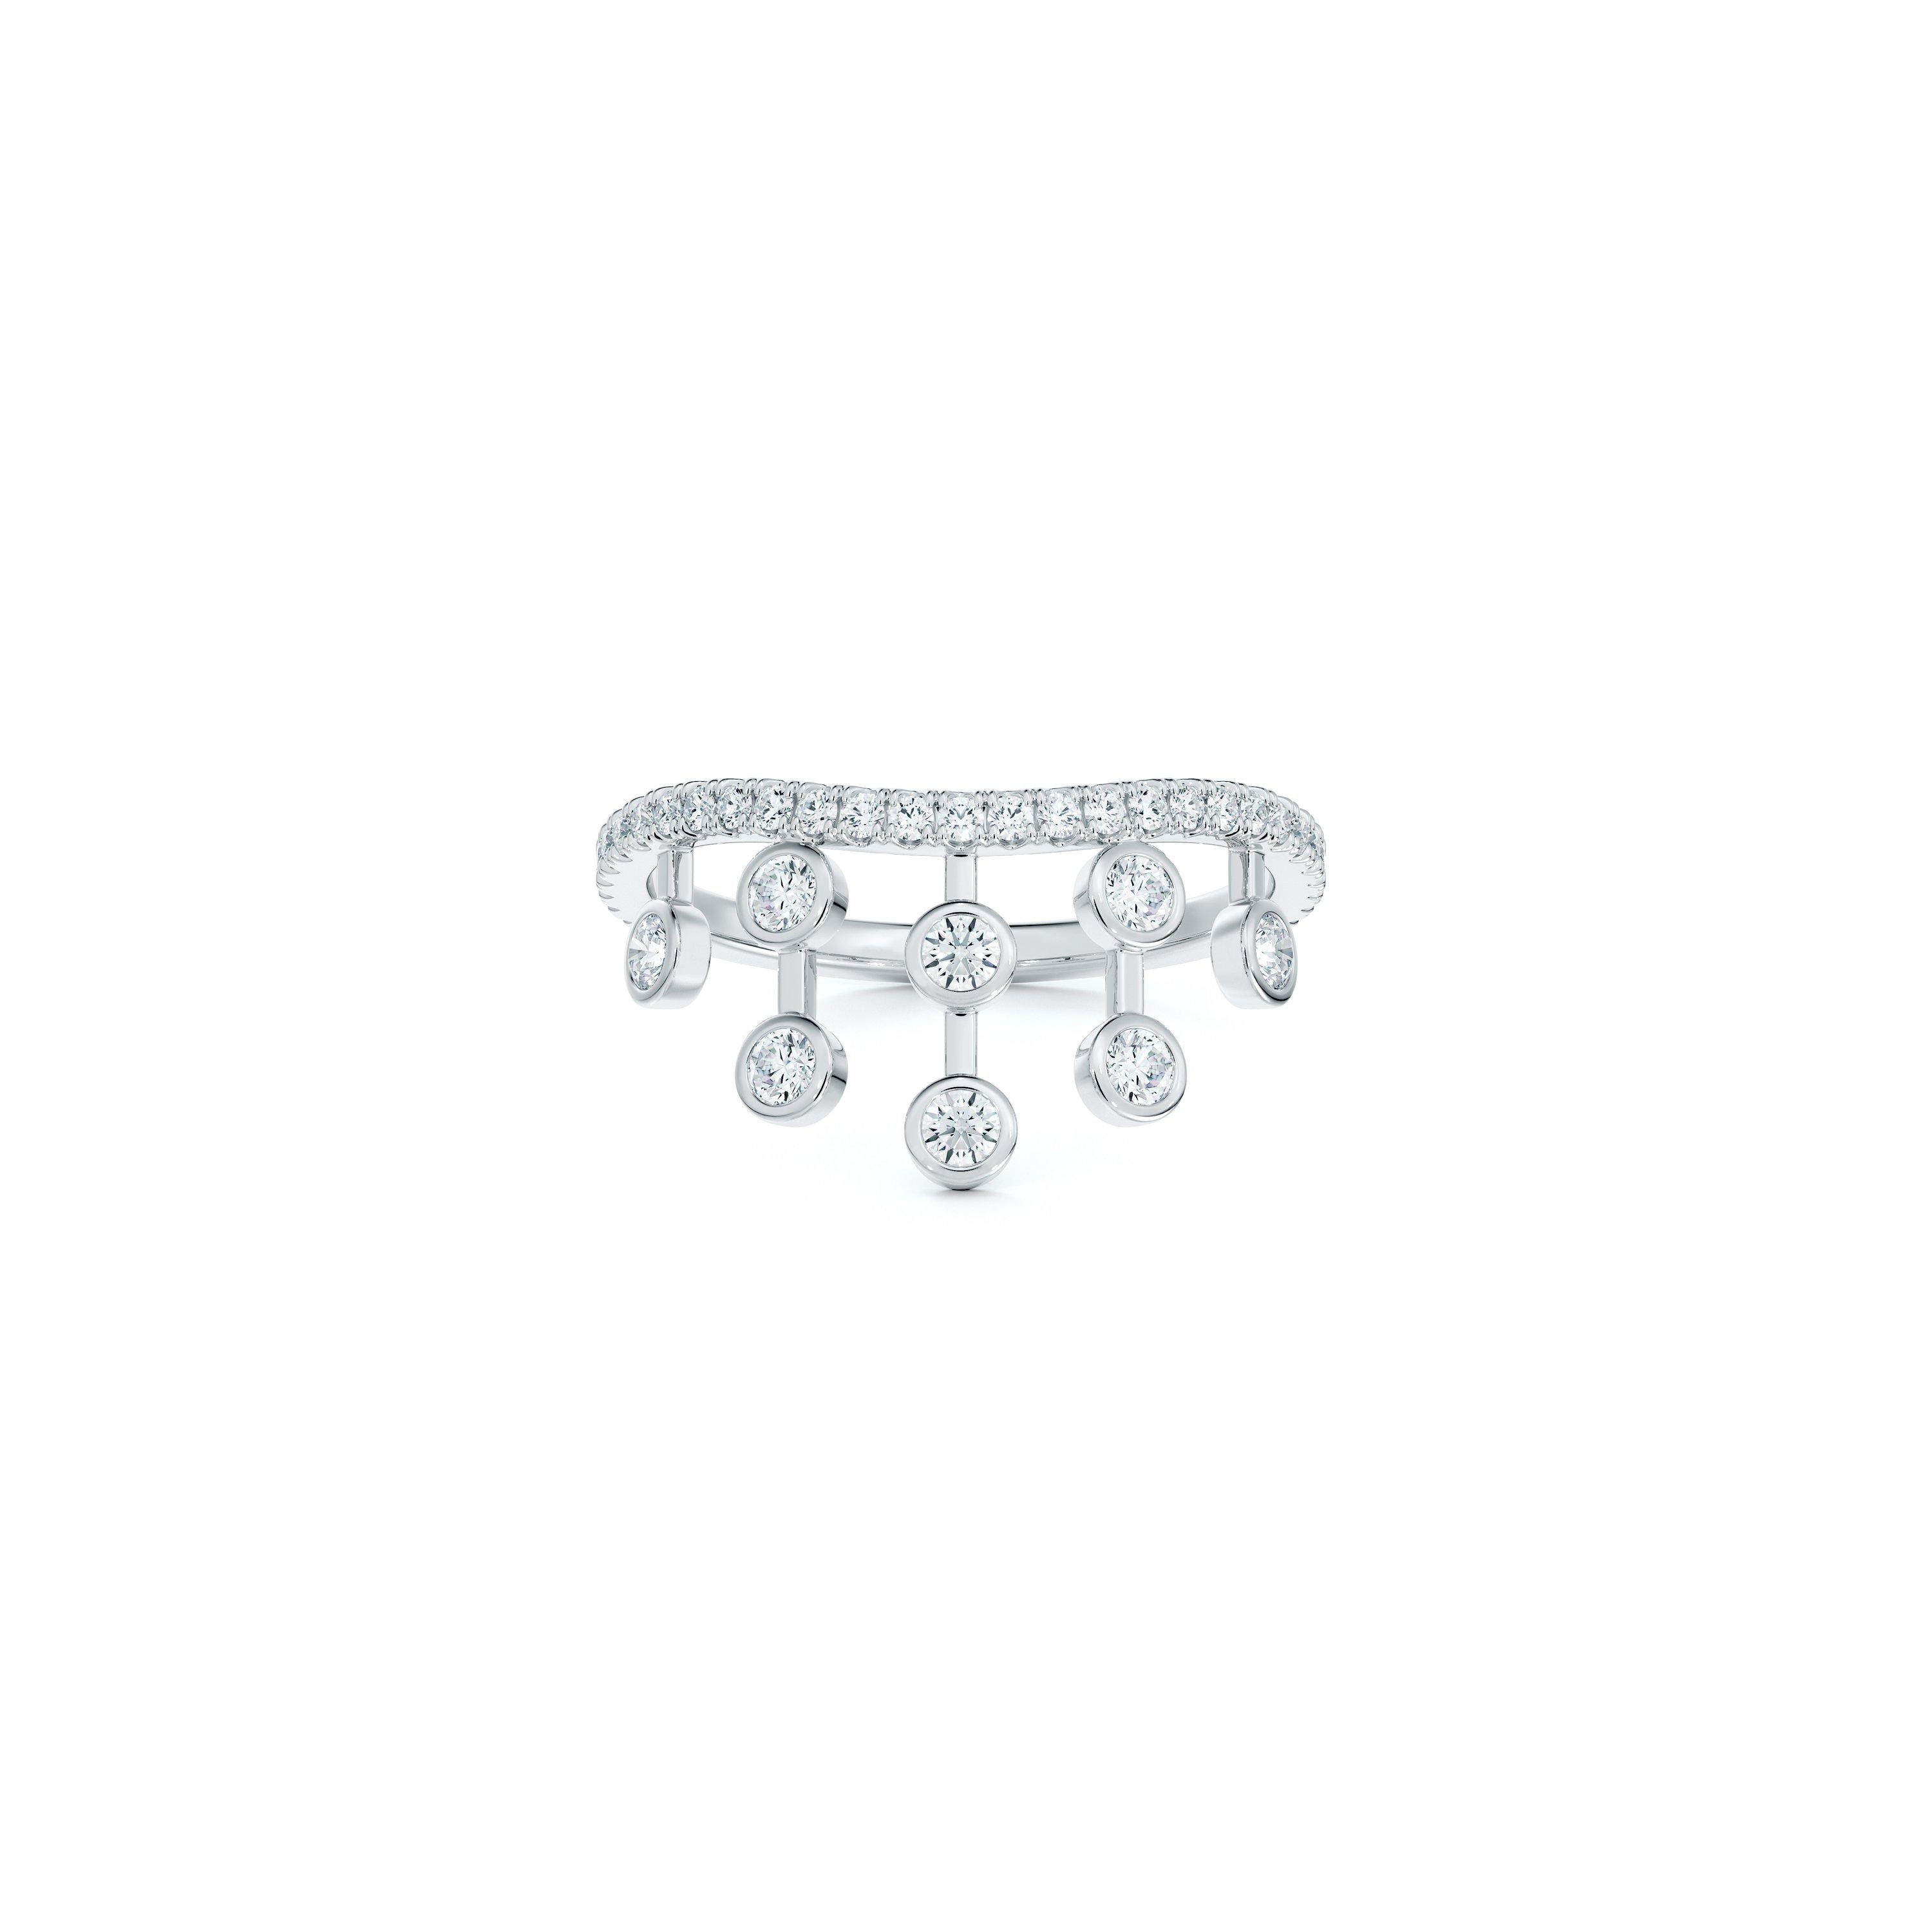 Dewdrop crown ring in platinum, image 1